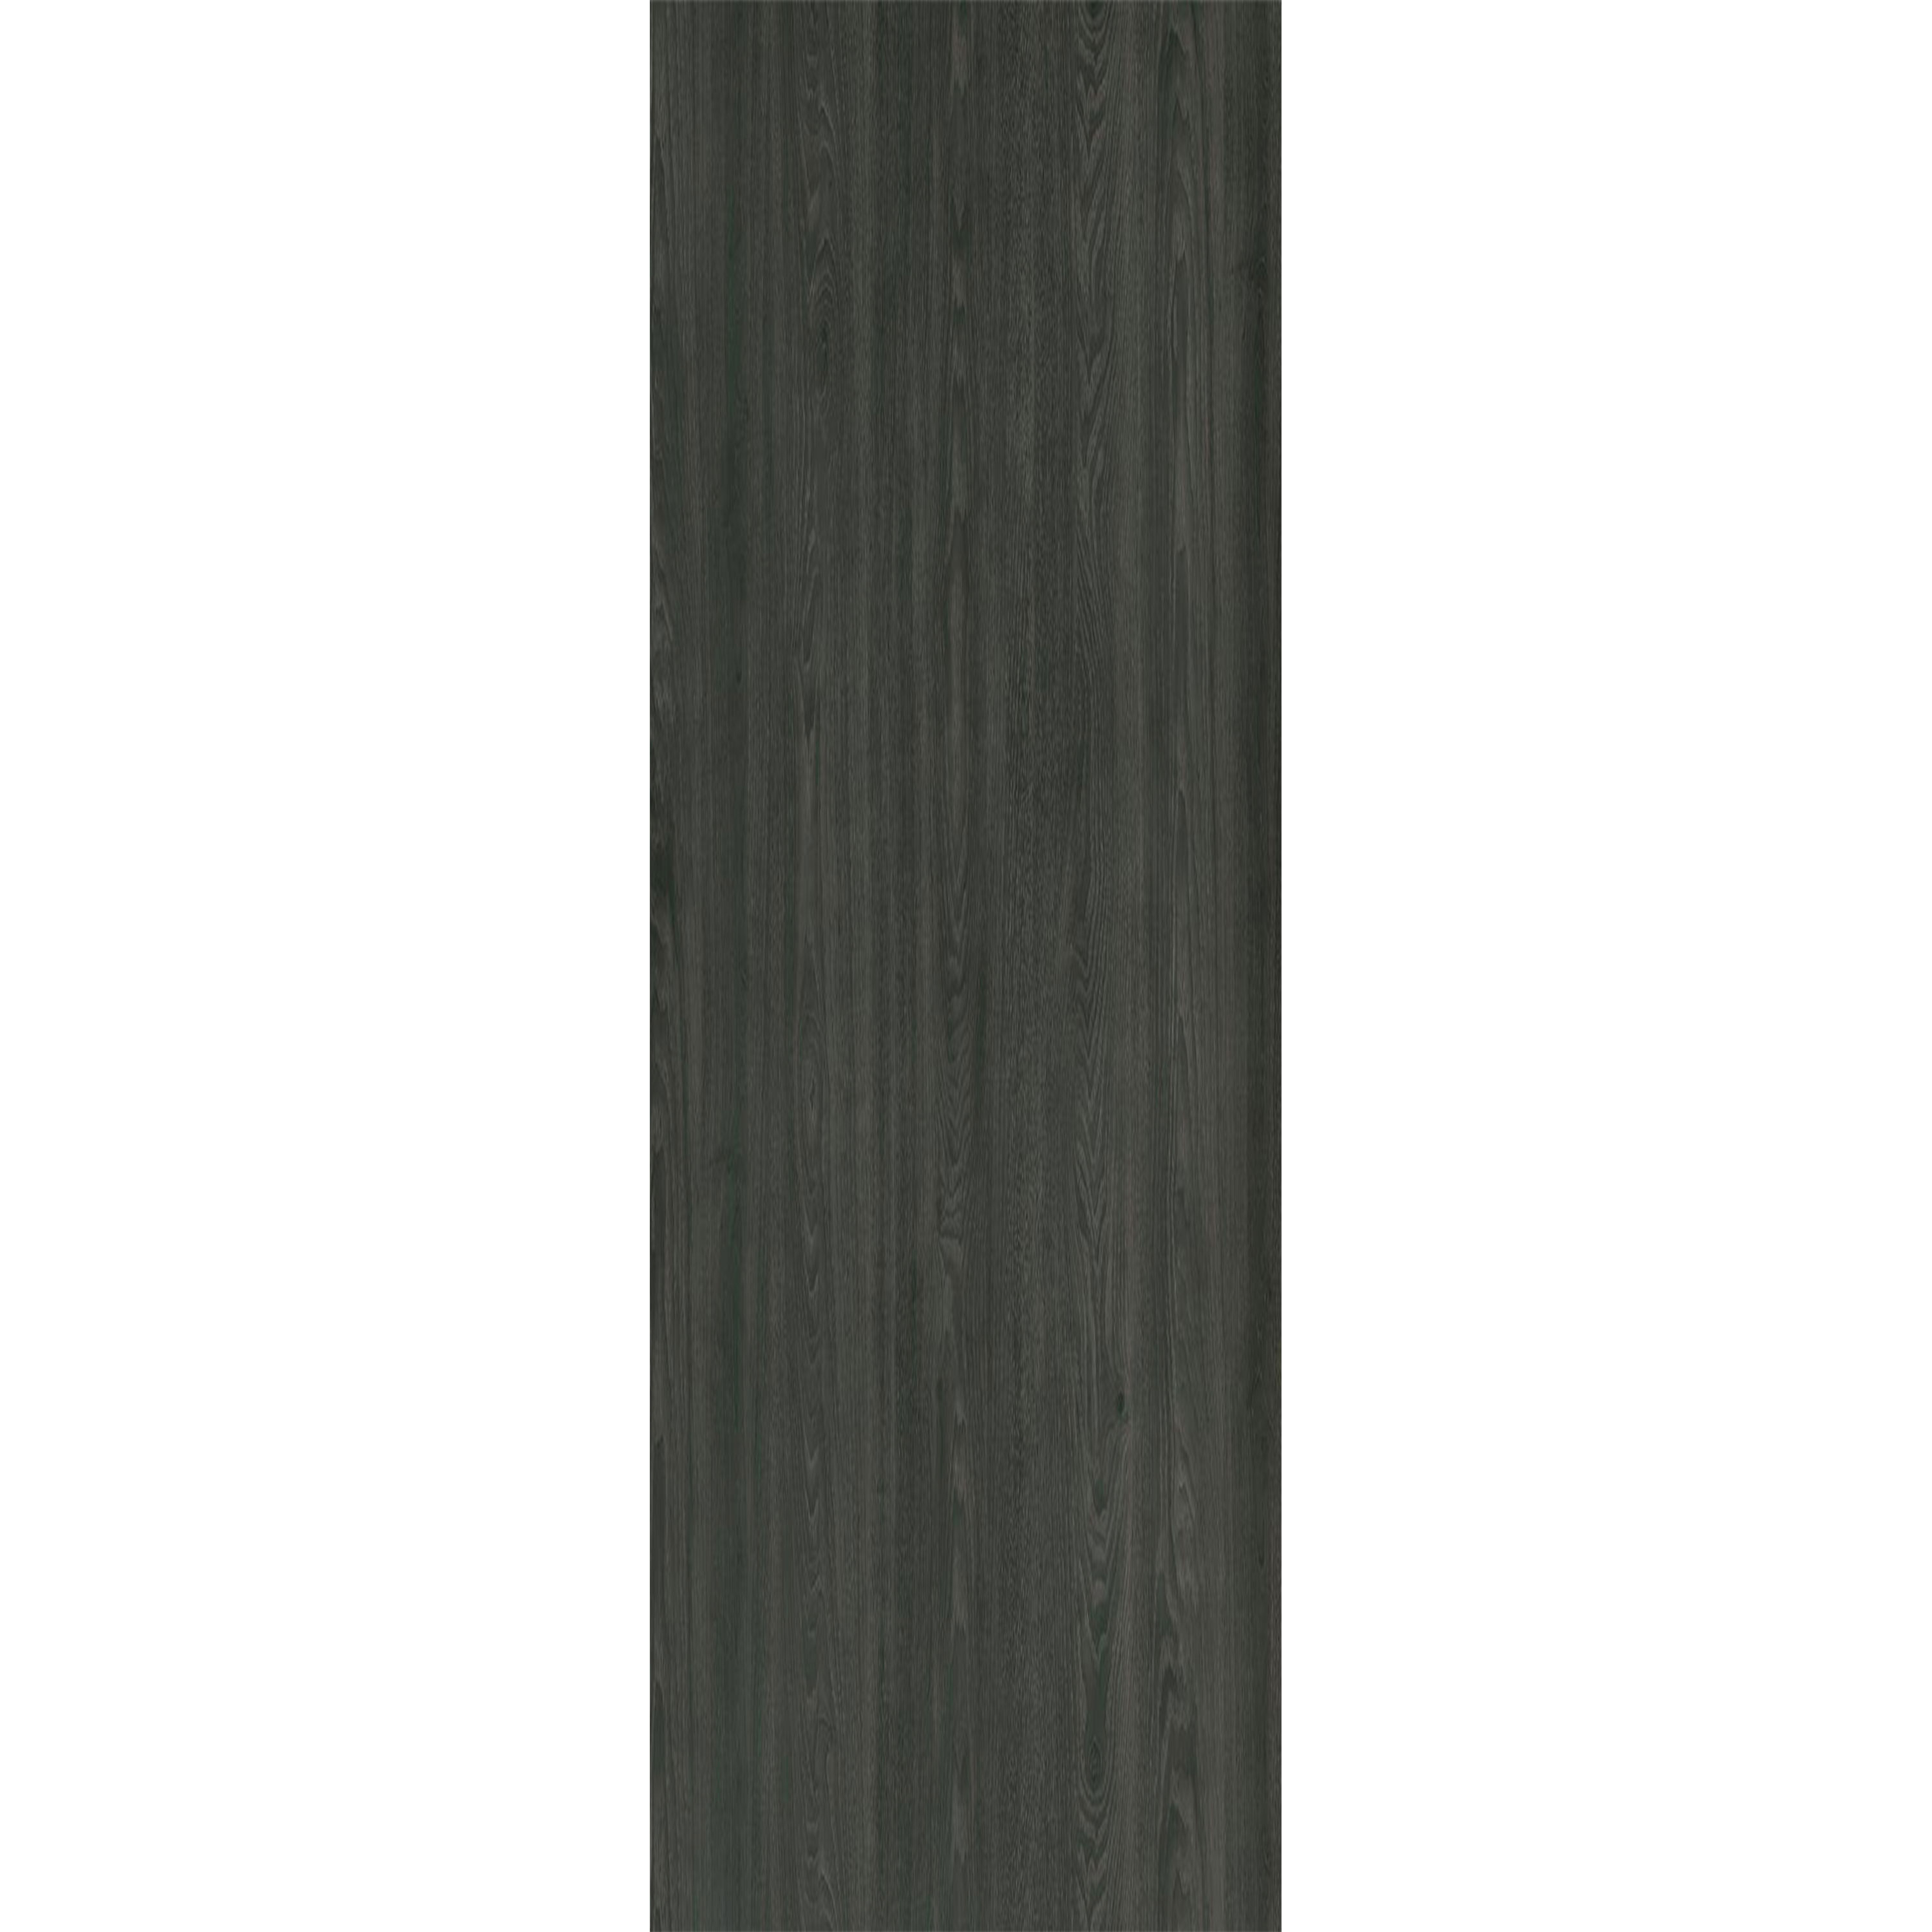 Vinylboden Klicksystem Blackwood Anthrazit 17,2x121cm